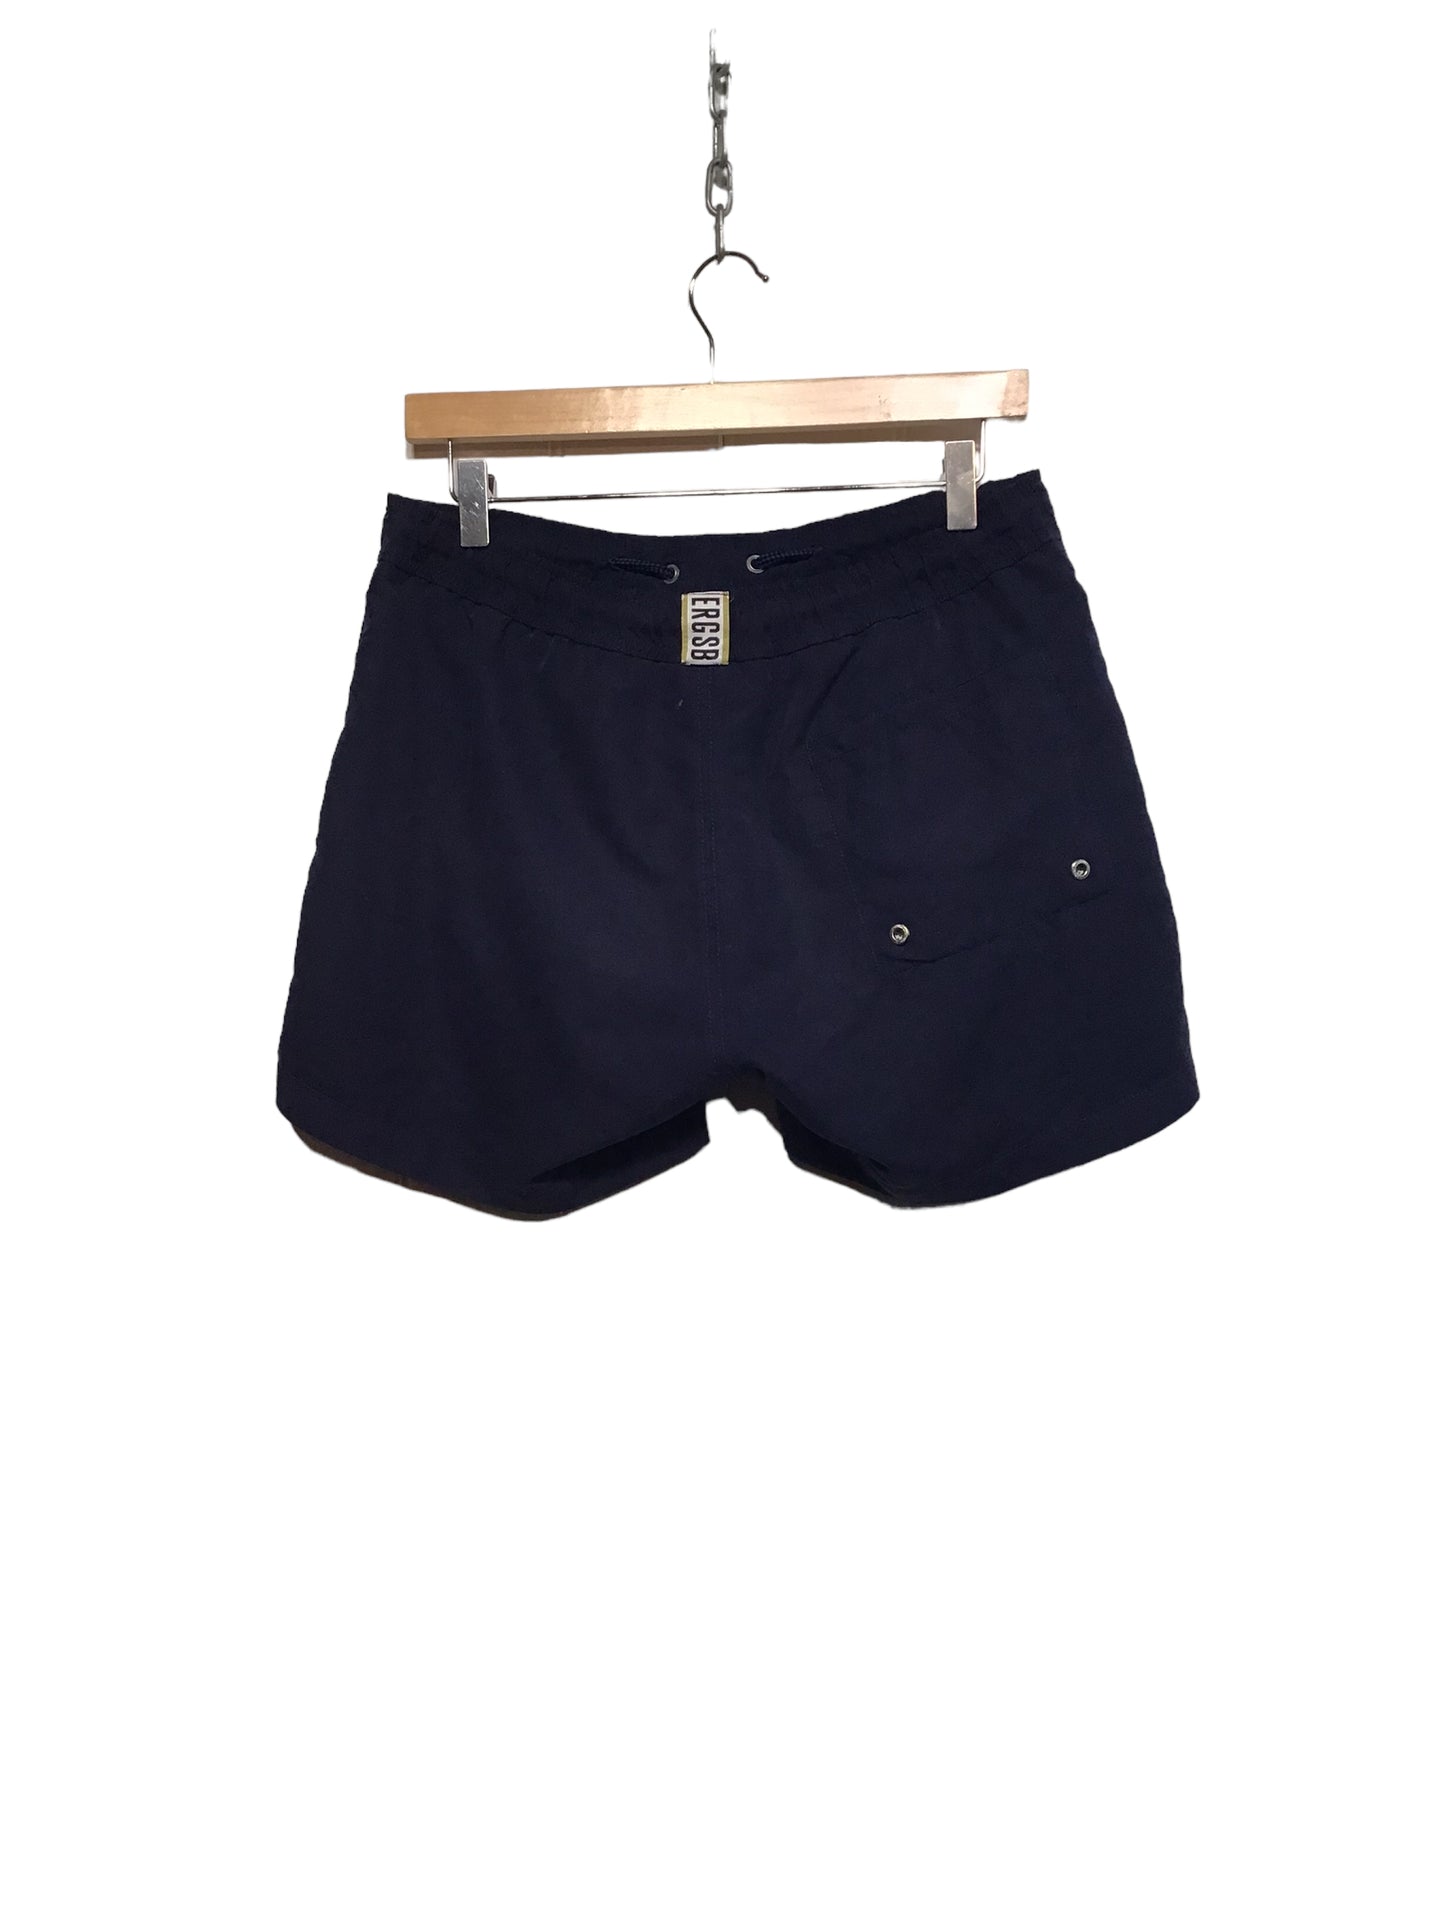 Navy Sport Shorts (Size S)